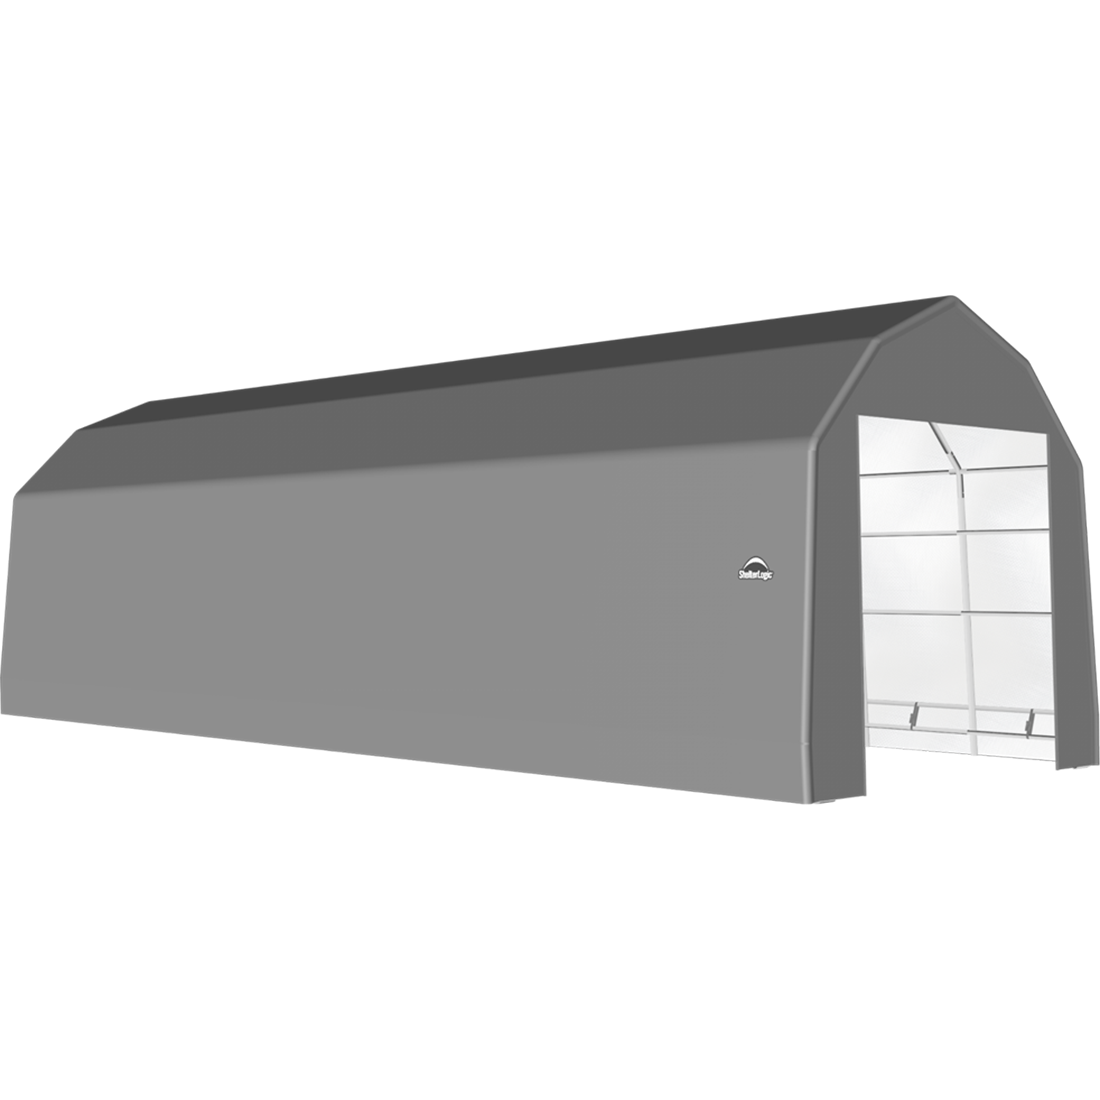 ShelterTech SP Series Barn Shelter, 15 ft. x 48 ft. x 14 ft. Heavy Duty PVC 14.5 oz. Gray